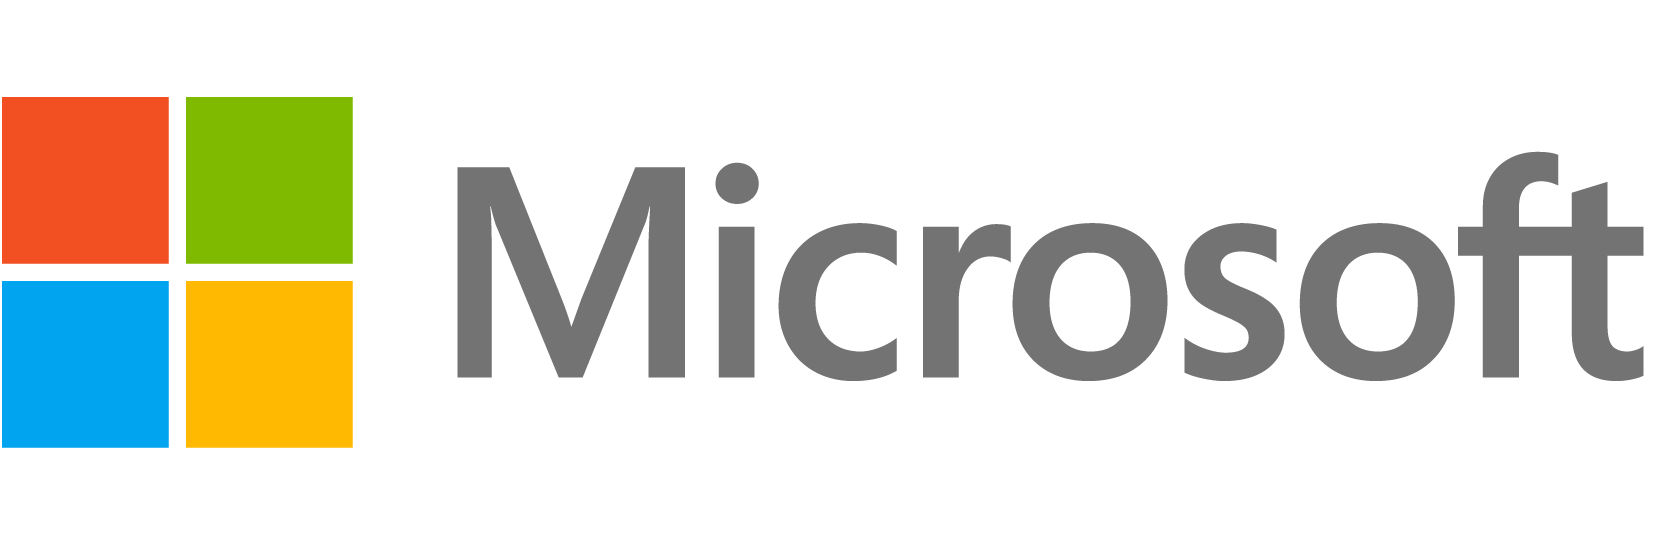 https://warrenenskat.com/wp-content/uploads/2019/01/Logo-Microsoft.png